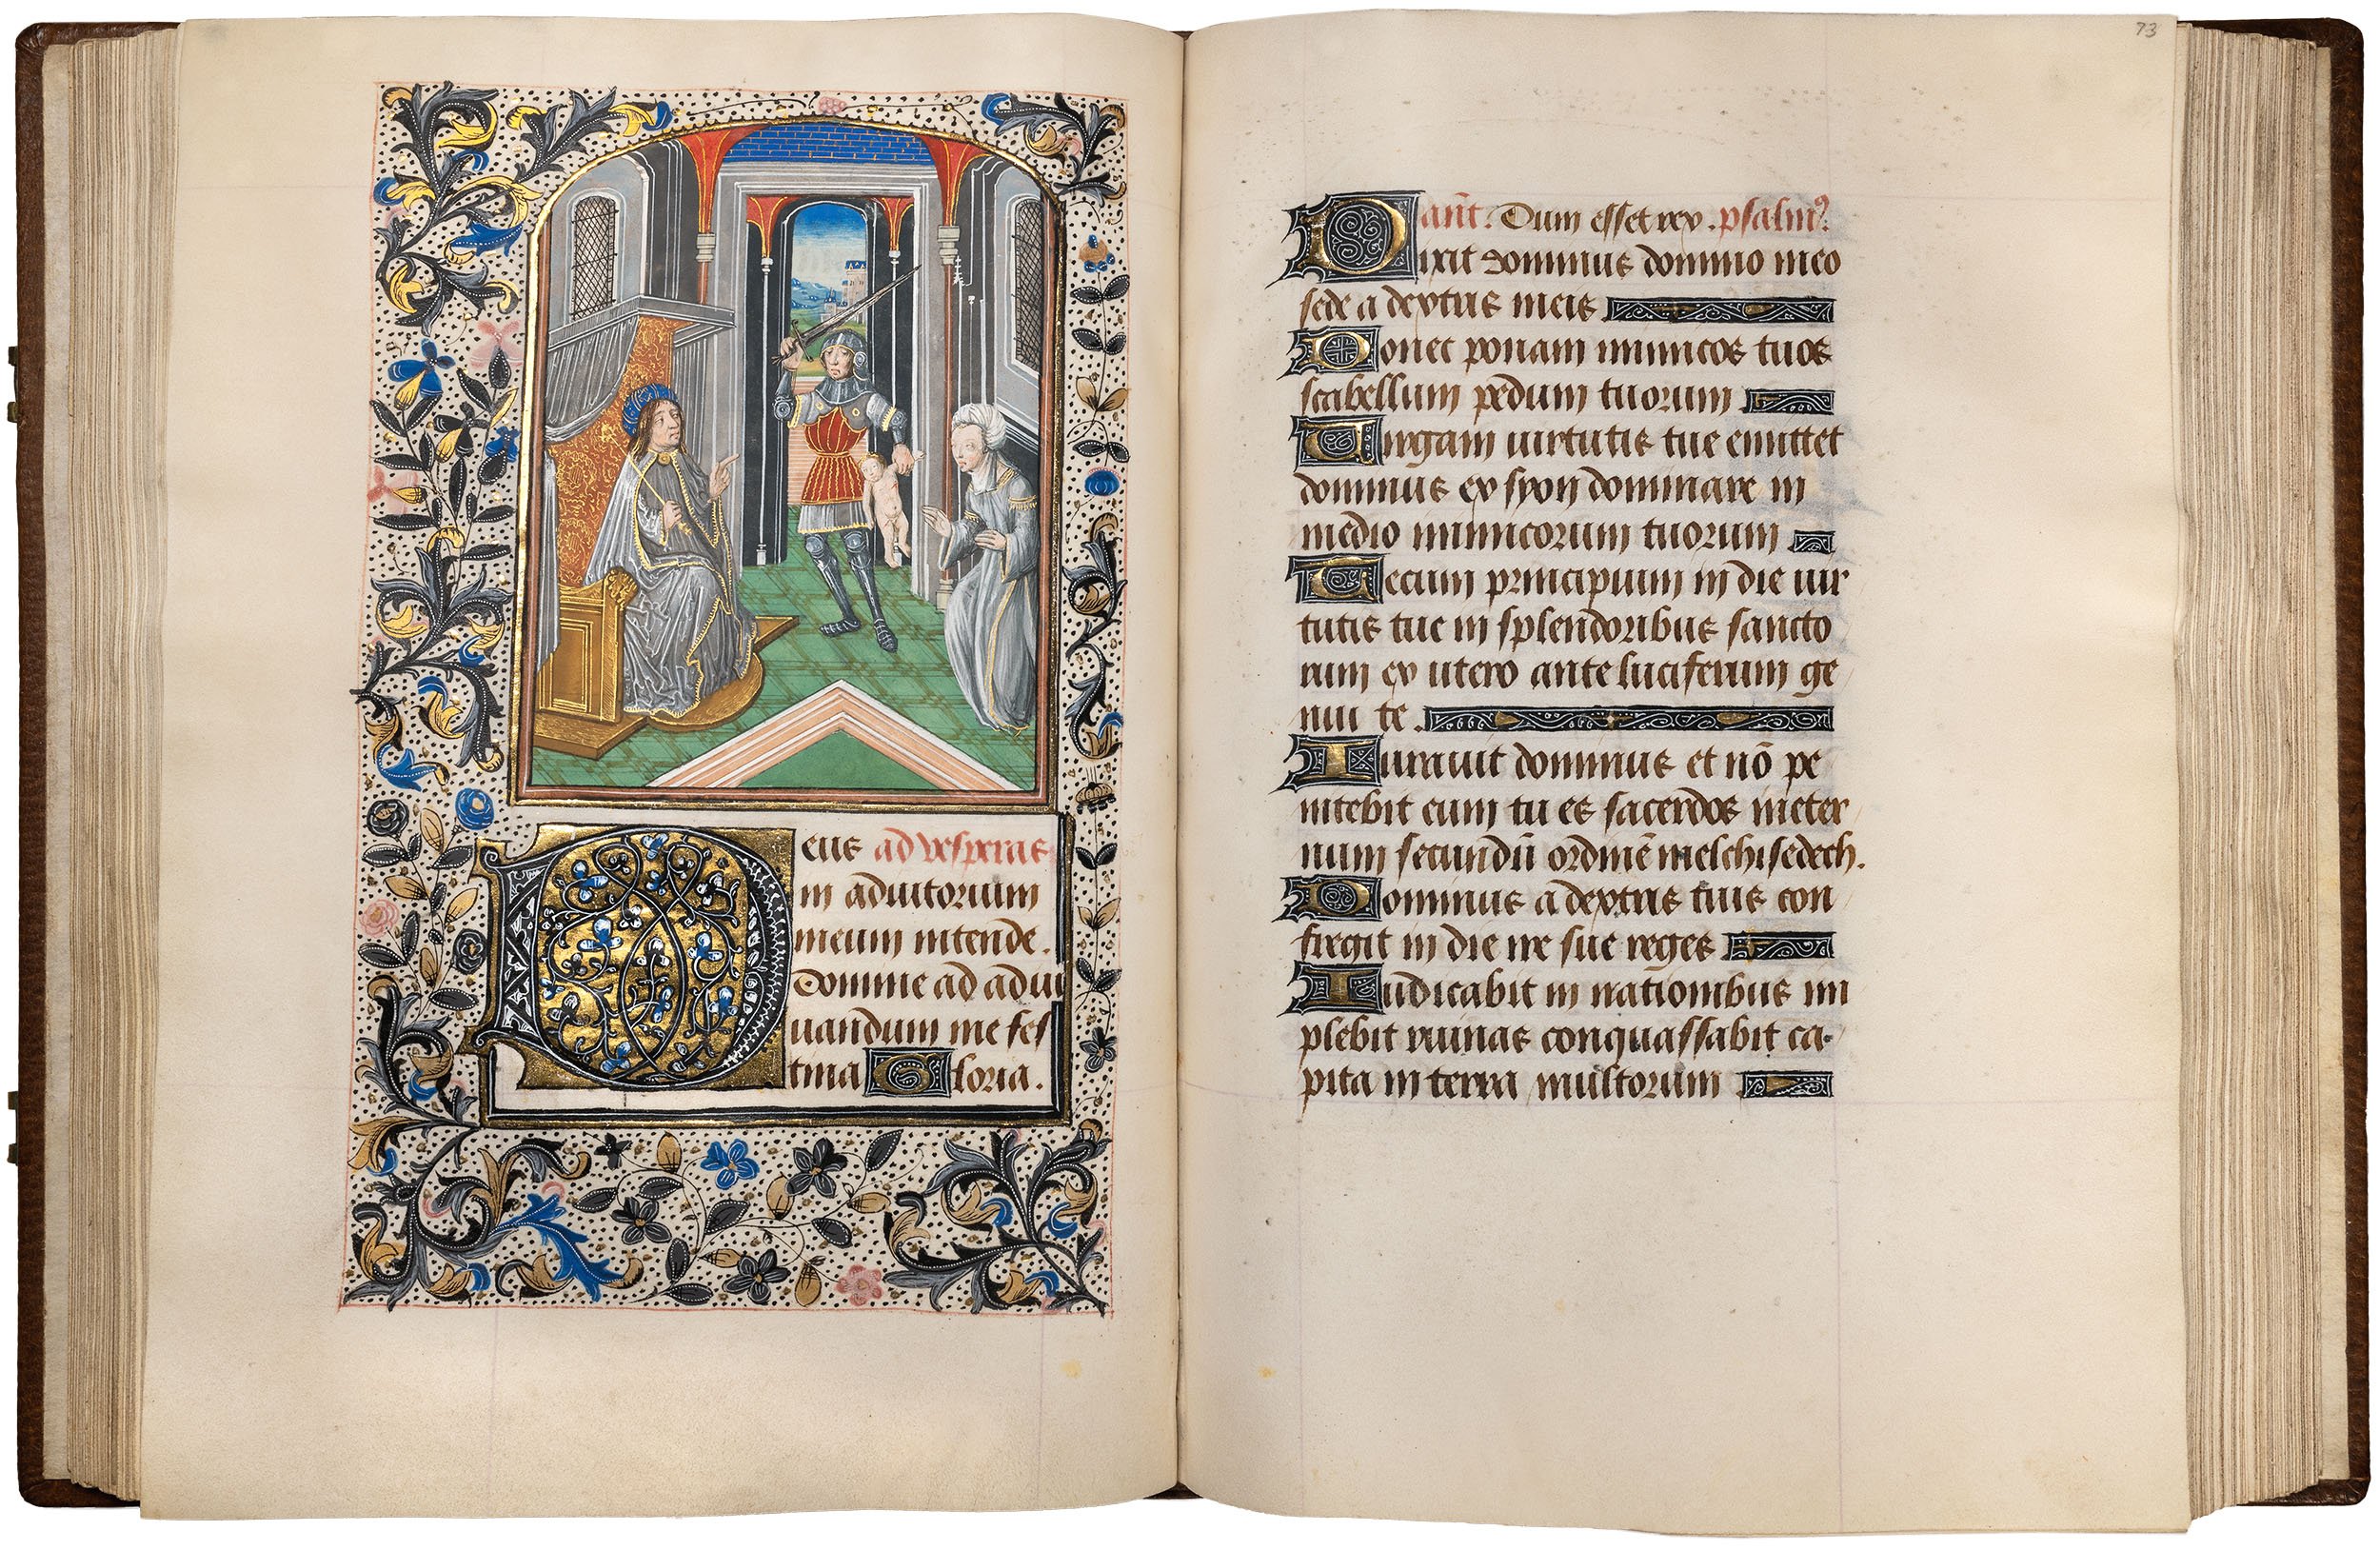 Book-of-hours-claude-toulongeon-grisaille-order-golden-fleece-bruges-edward-iv-folio-28.jpg